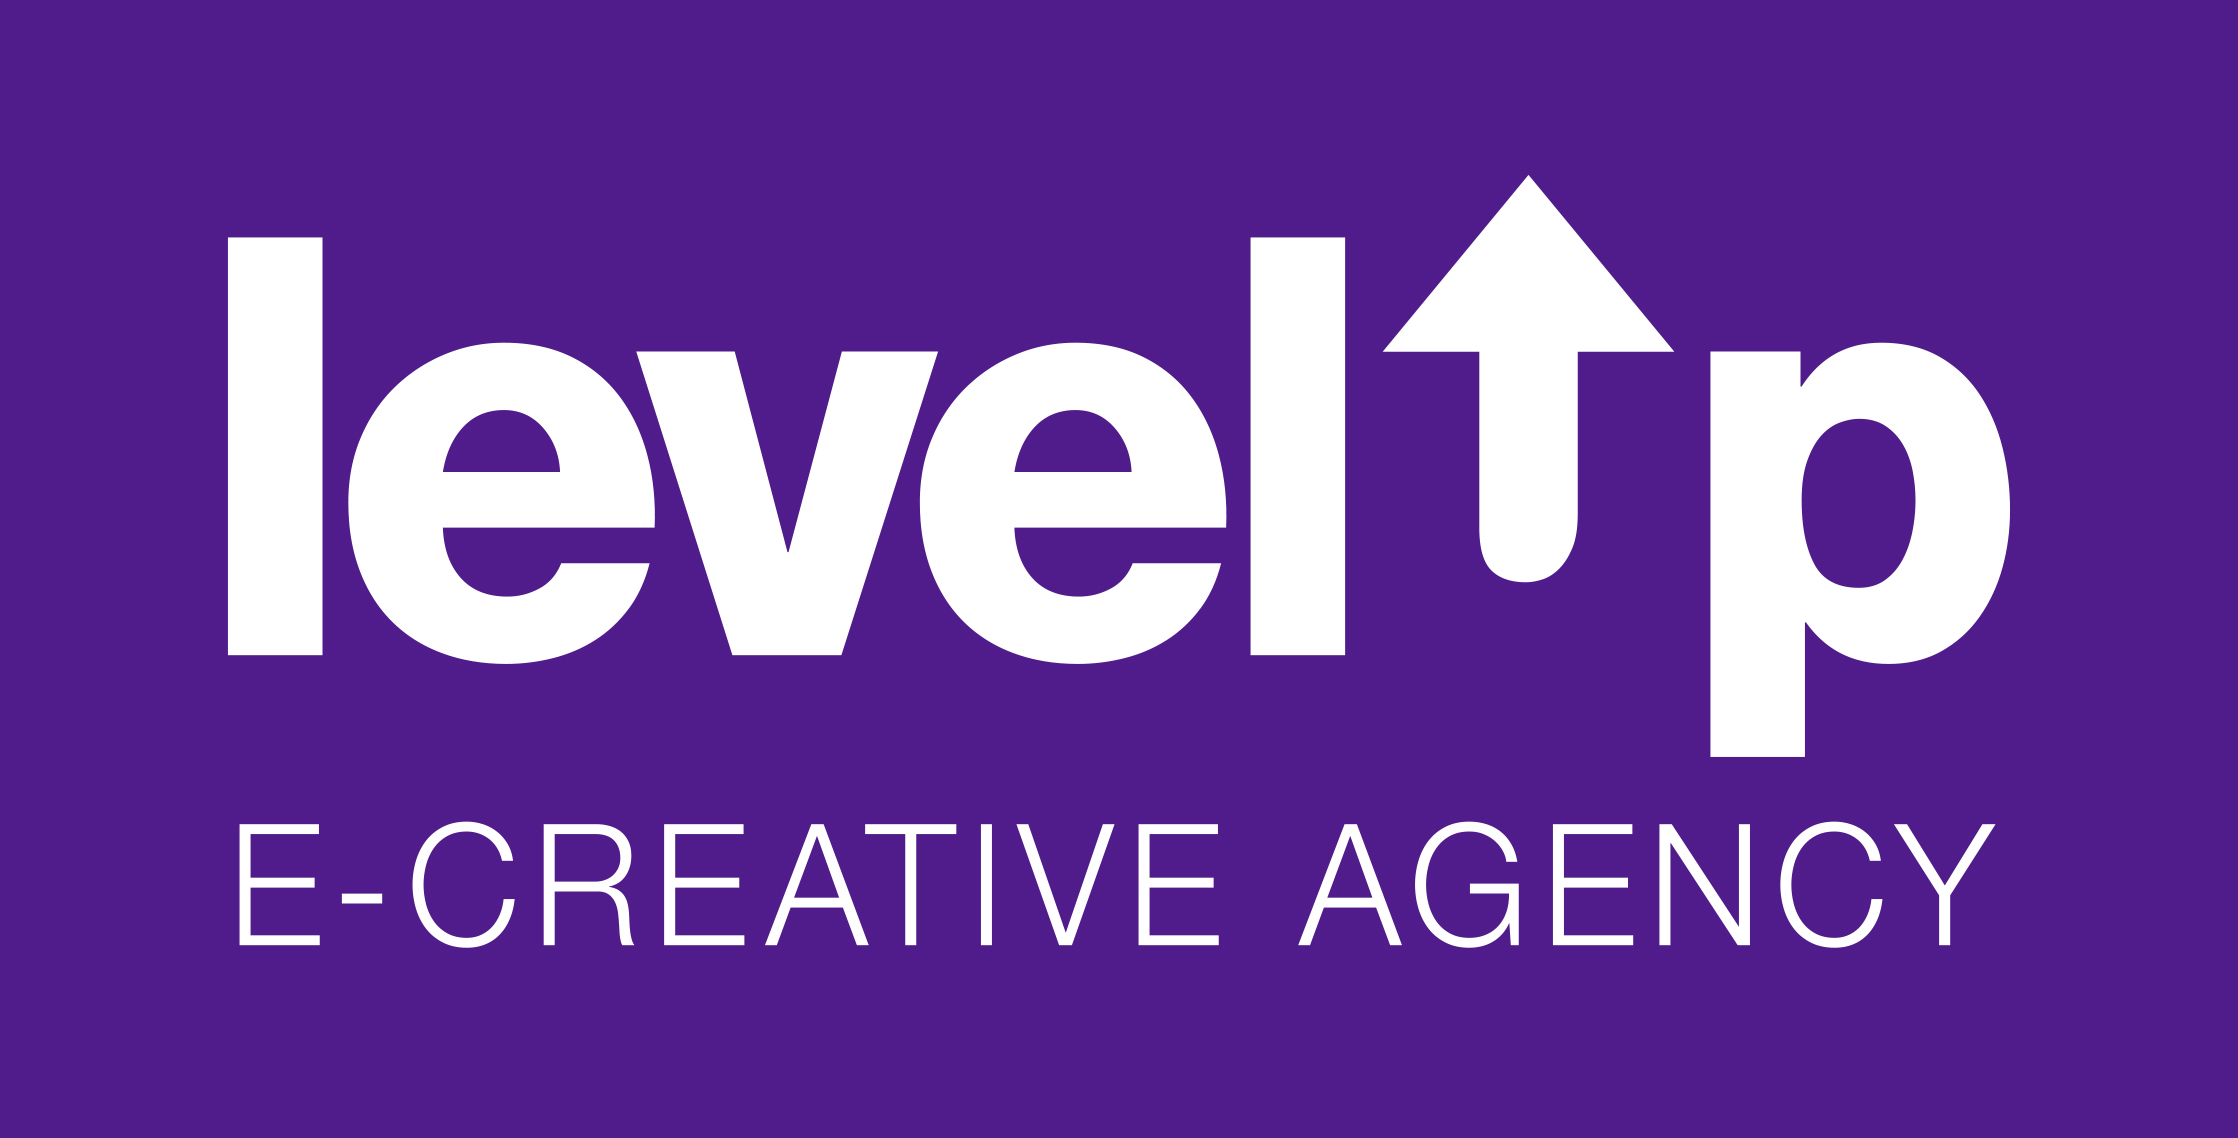 Level Up studio e-creative agency